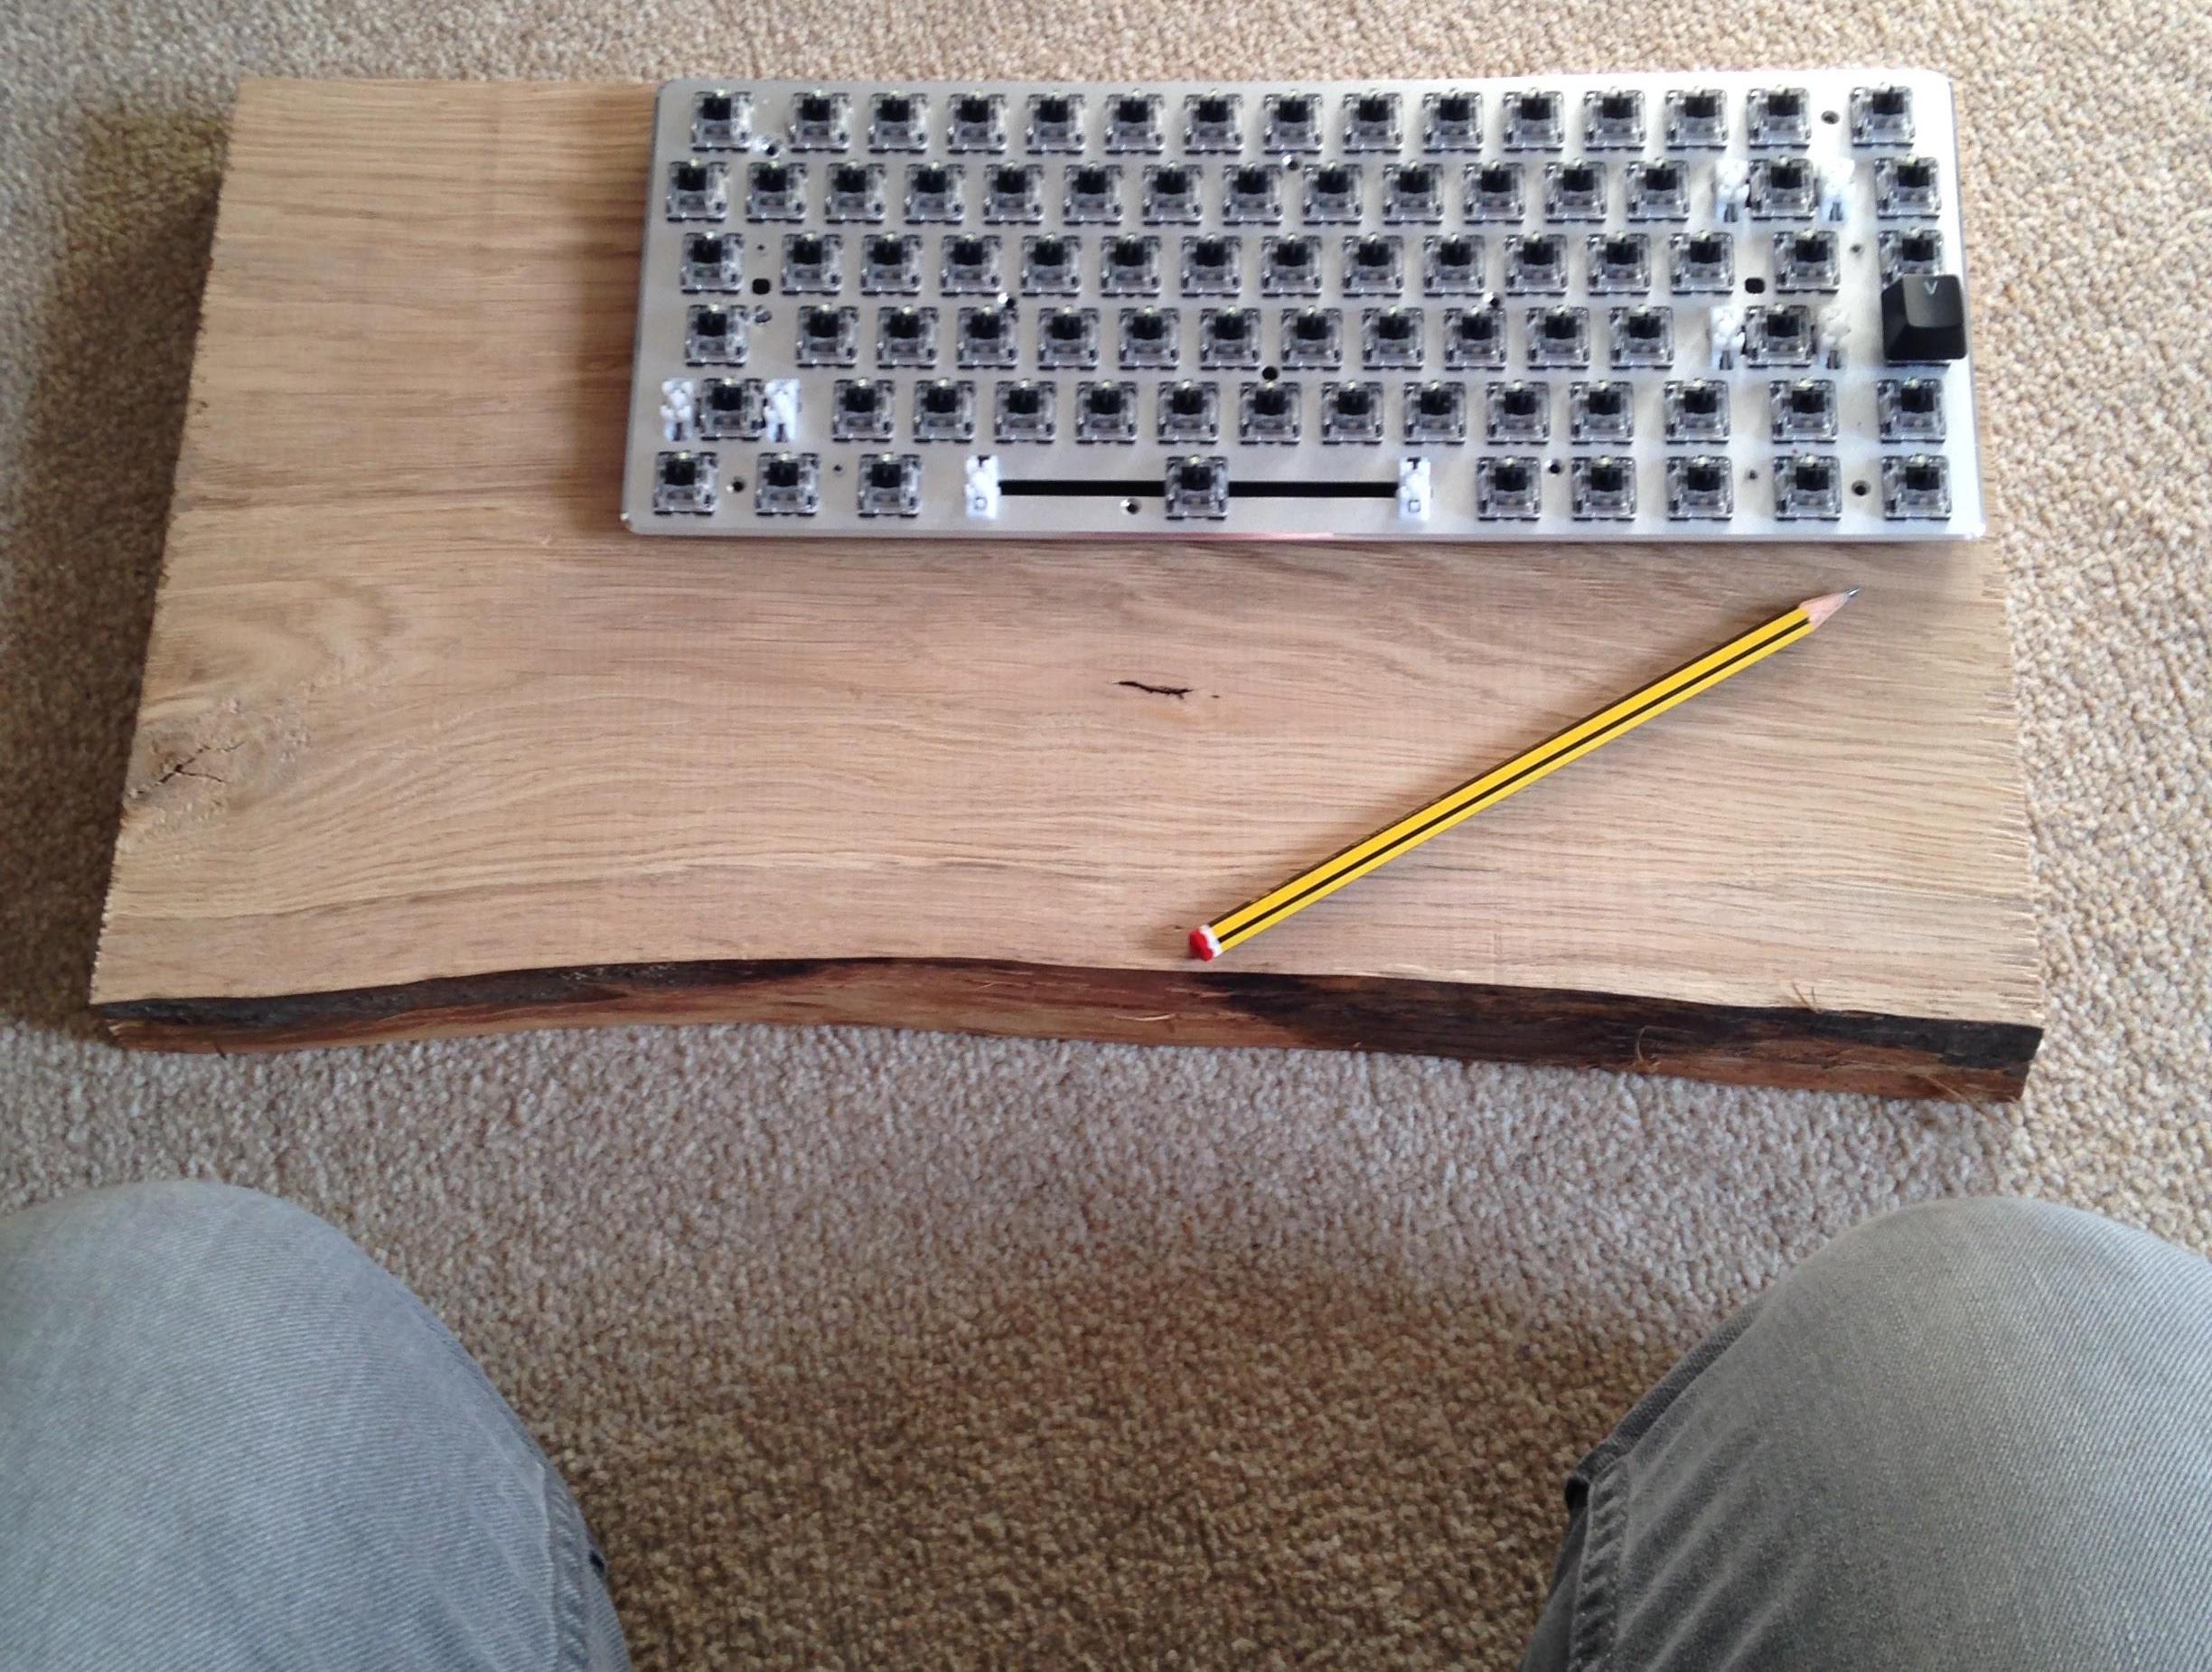 building-a-custom-keyboard-case Pencilled outline